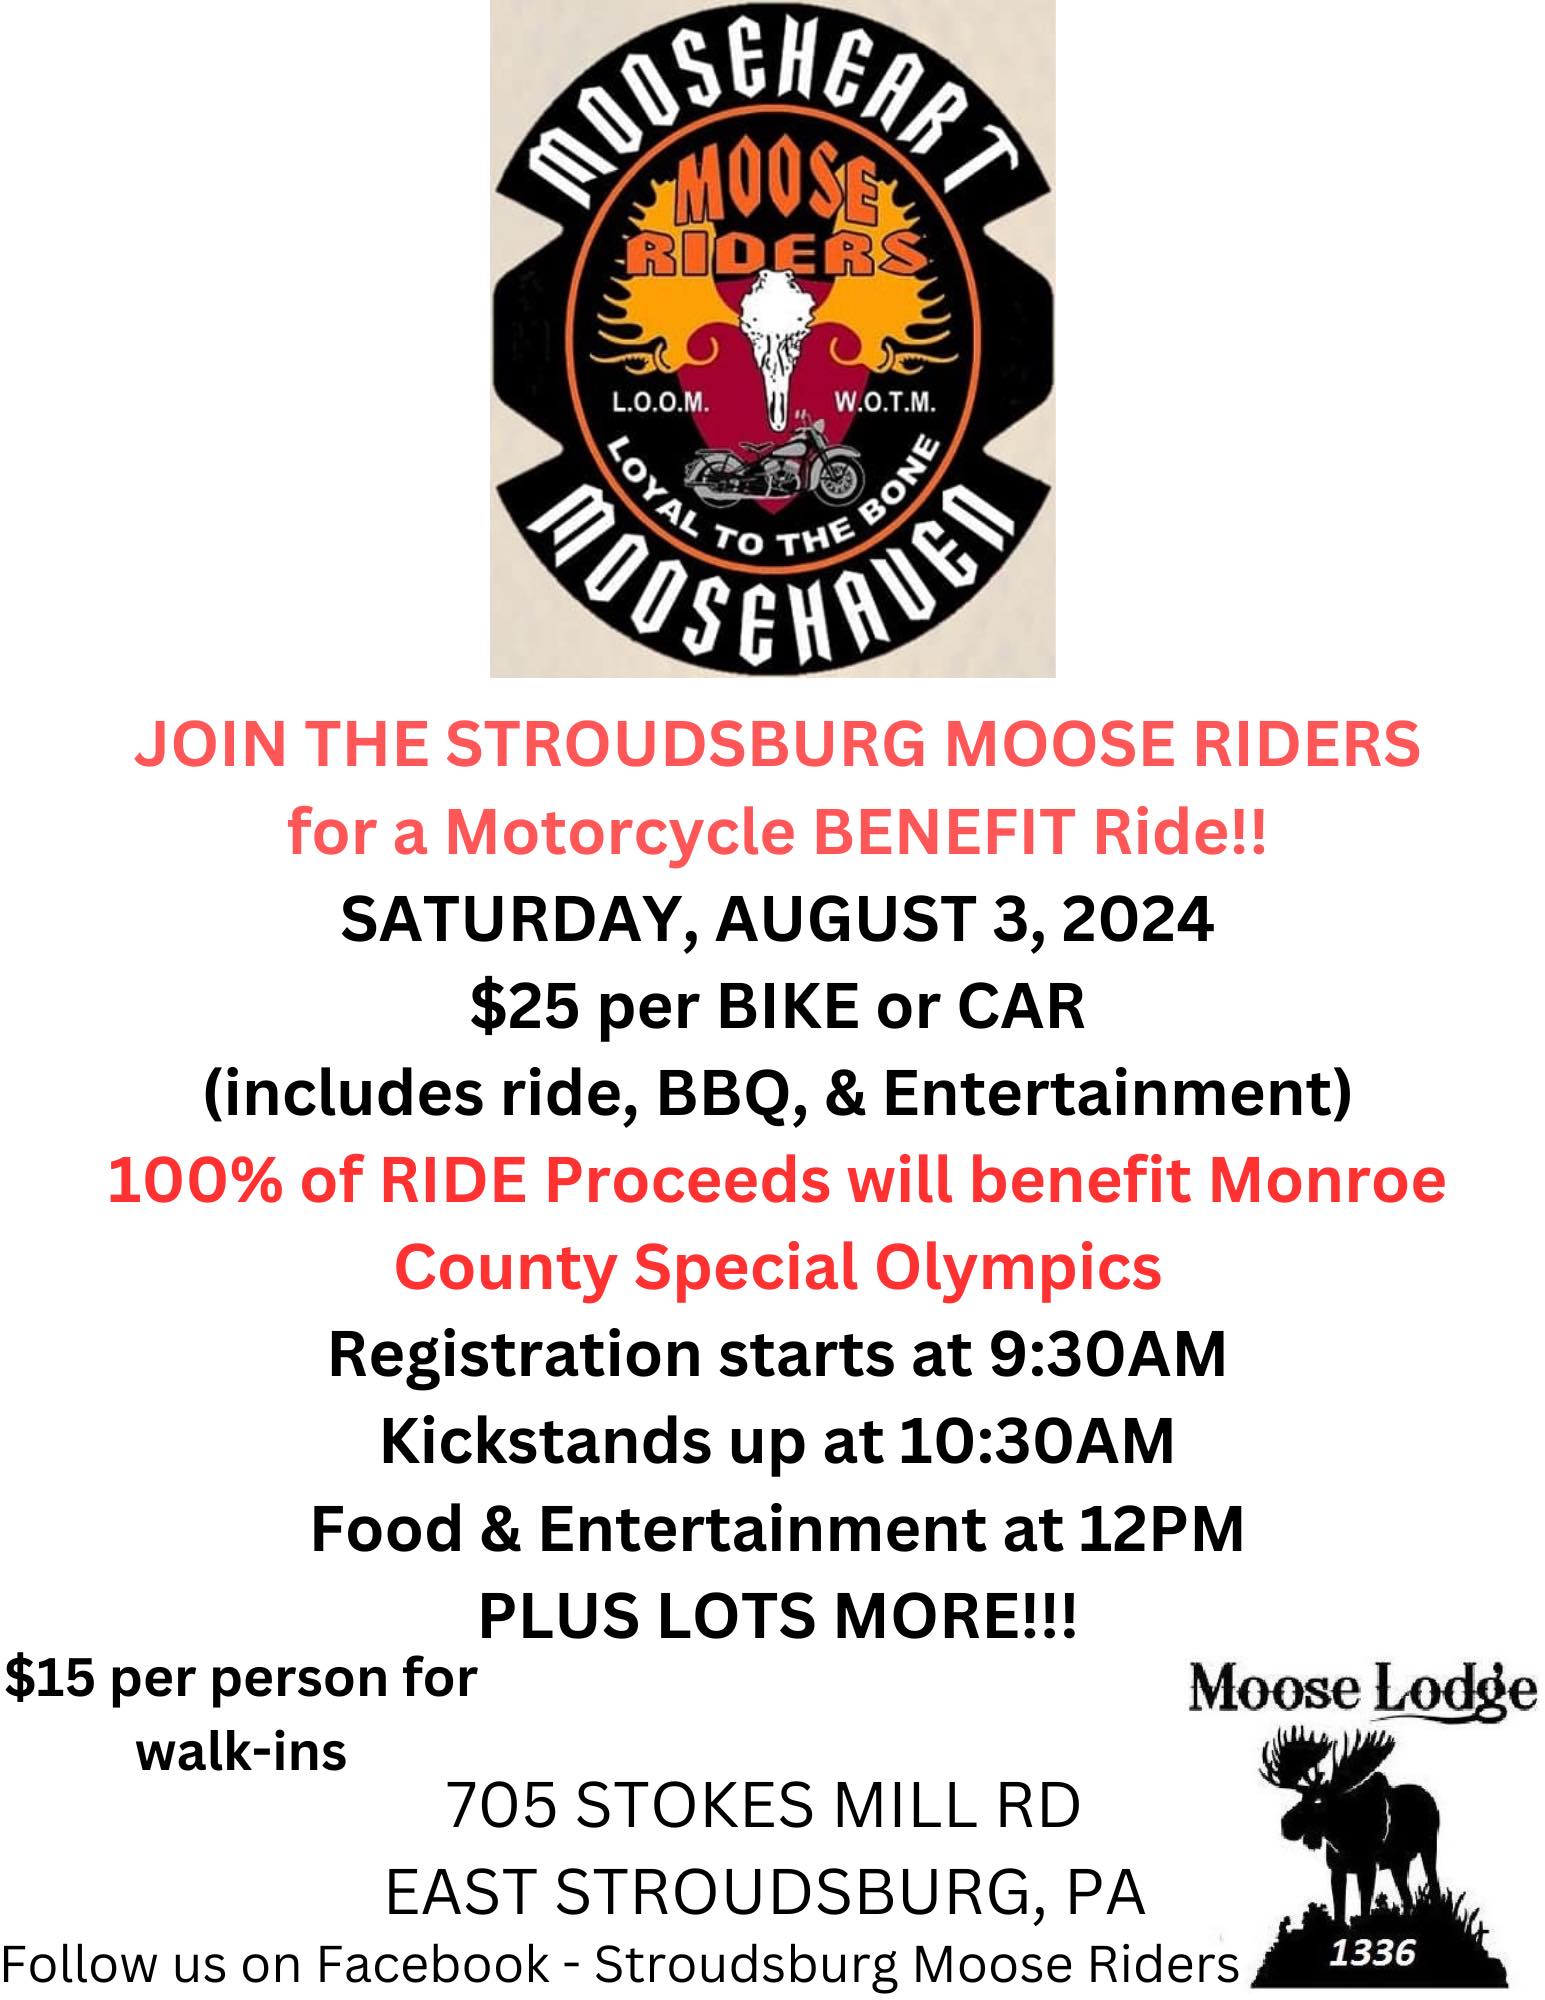 Stroudsburg Moose Riders - Benefit Ride